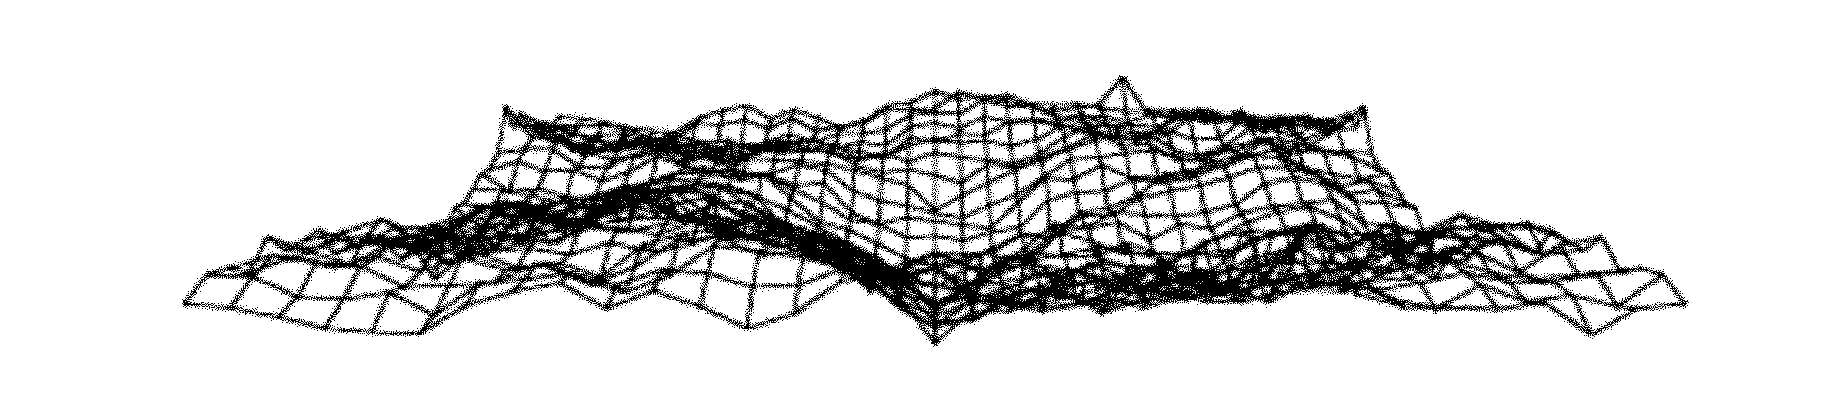 Fractal multi-resolution simplified method used for large-scale terrain rendering